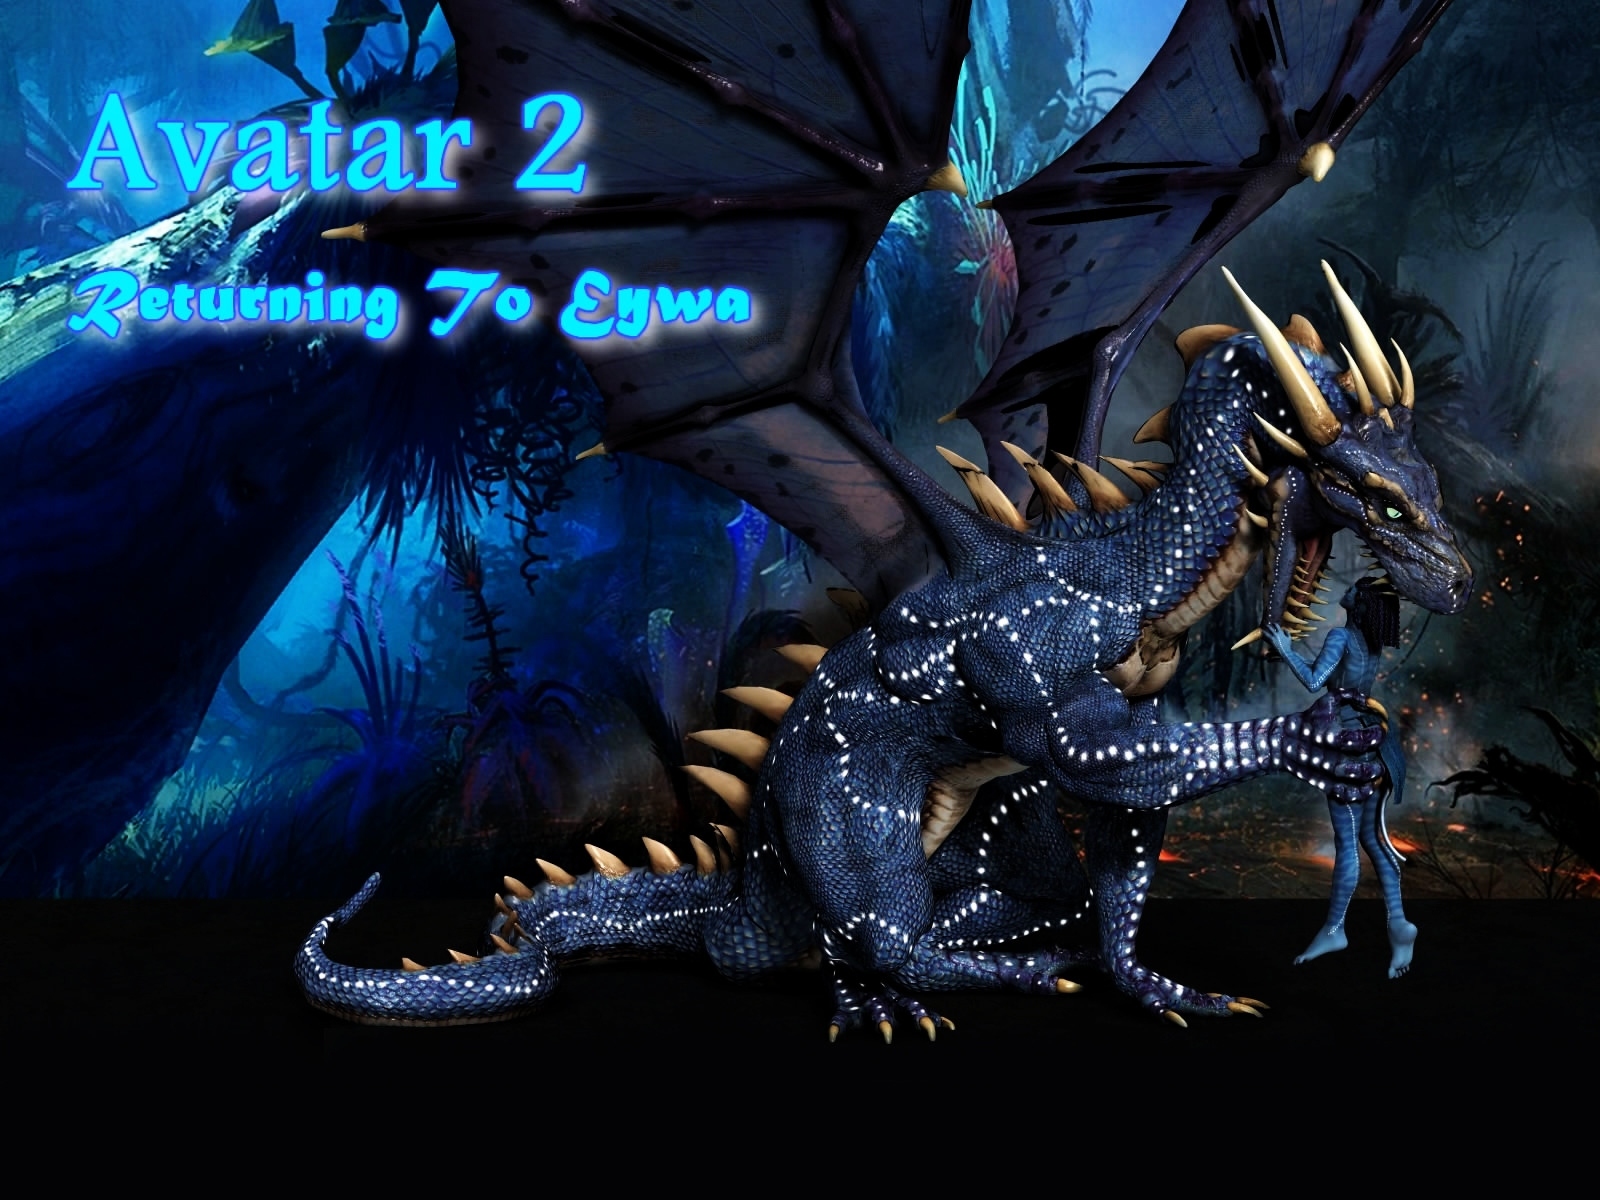 2015 Avatar 2 Returning to Eywa for 1600 x 1200 resolution